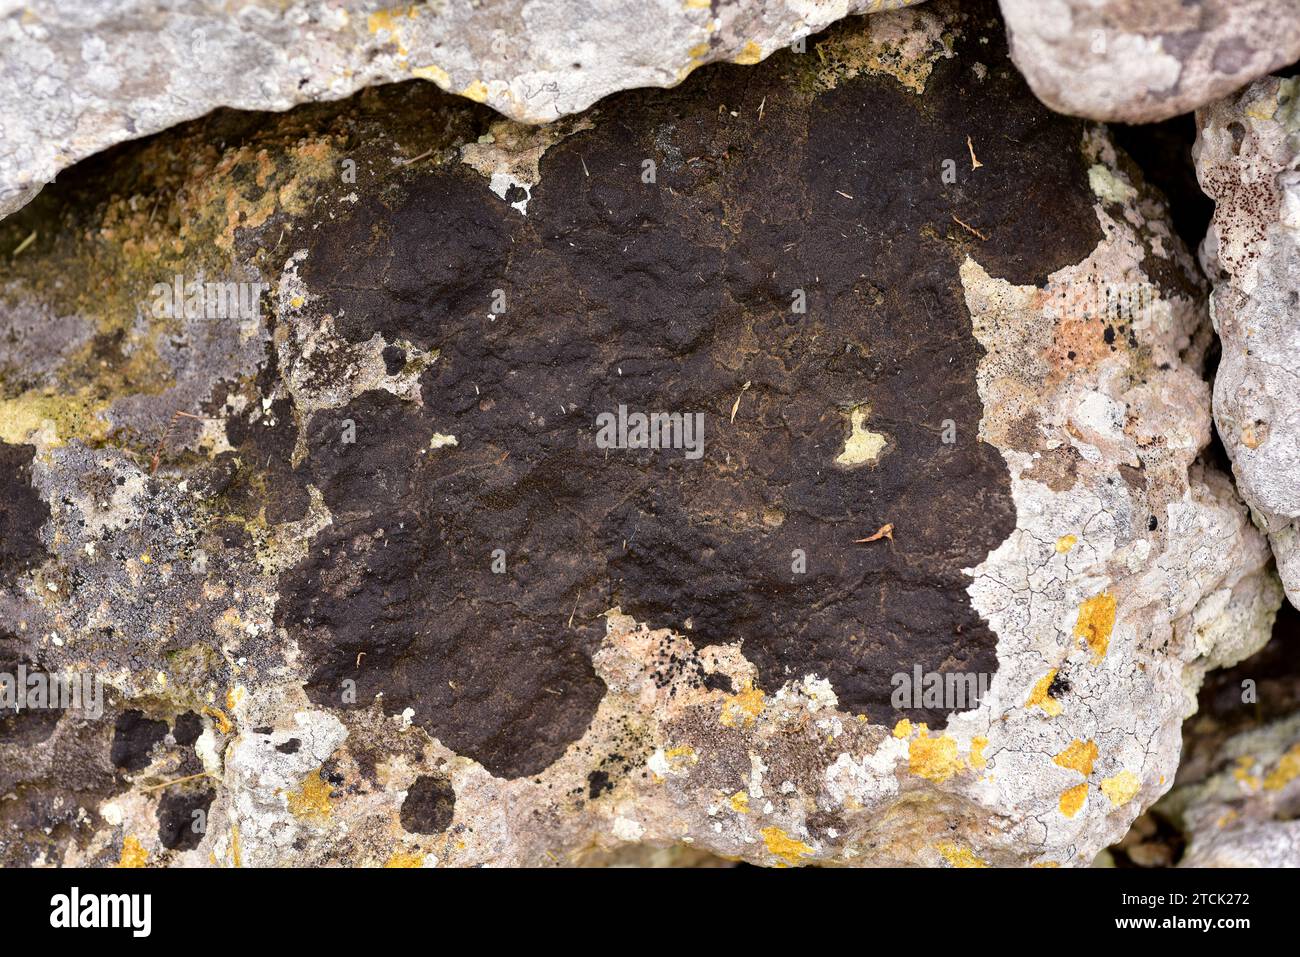 Verrucaria nigrescens is a black crustose lichen that grows on limestone rocks. This photo was taken in Menorca, Balearic Islands, Spain. Stock Photo